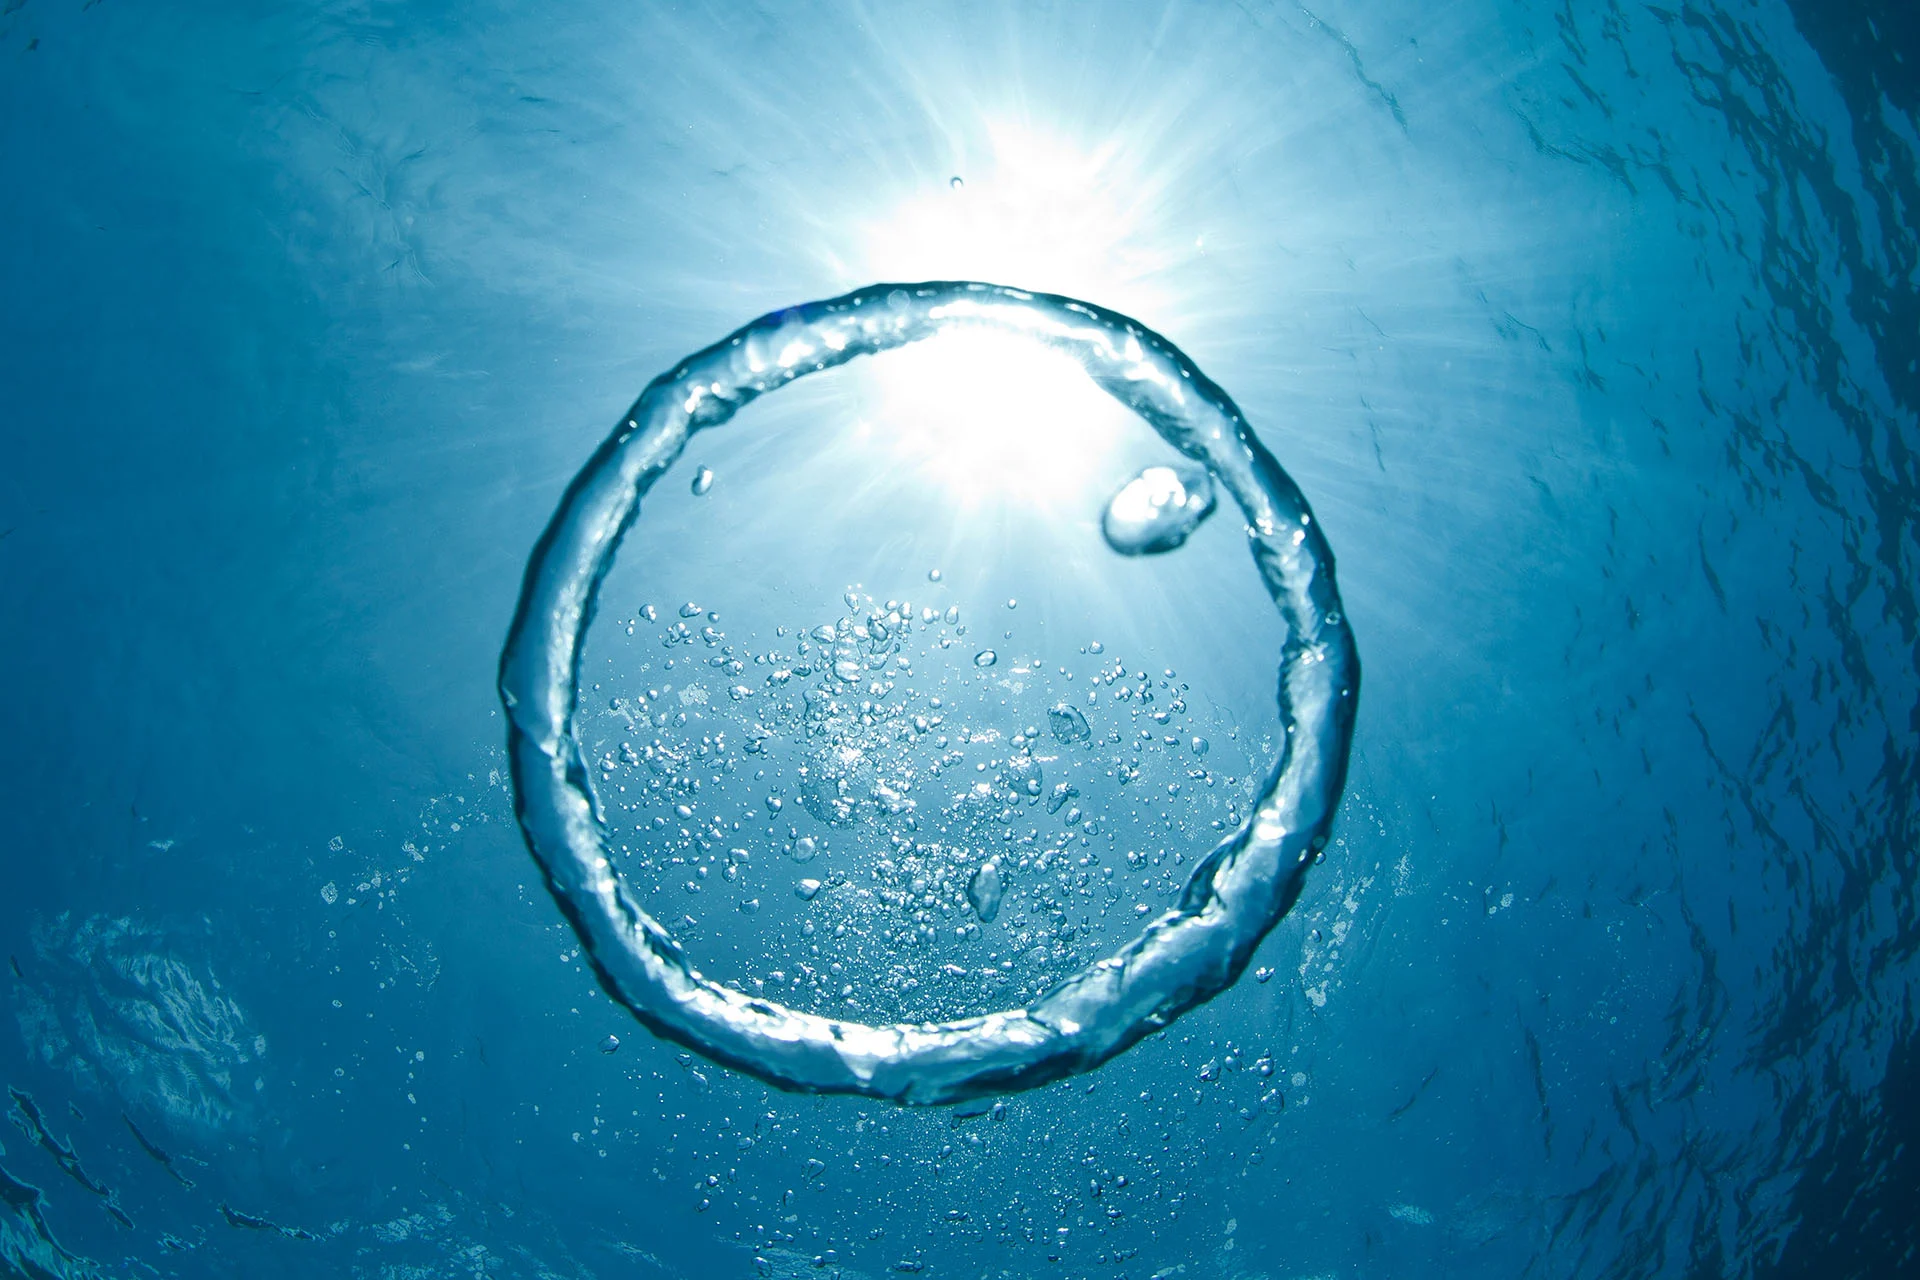 Circular shape in water